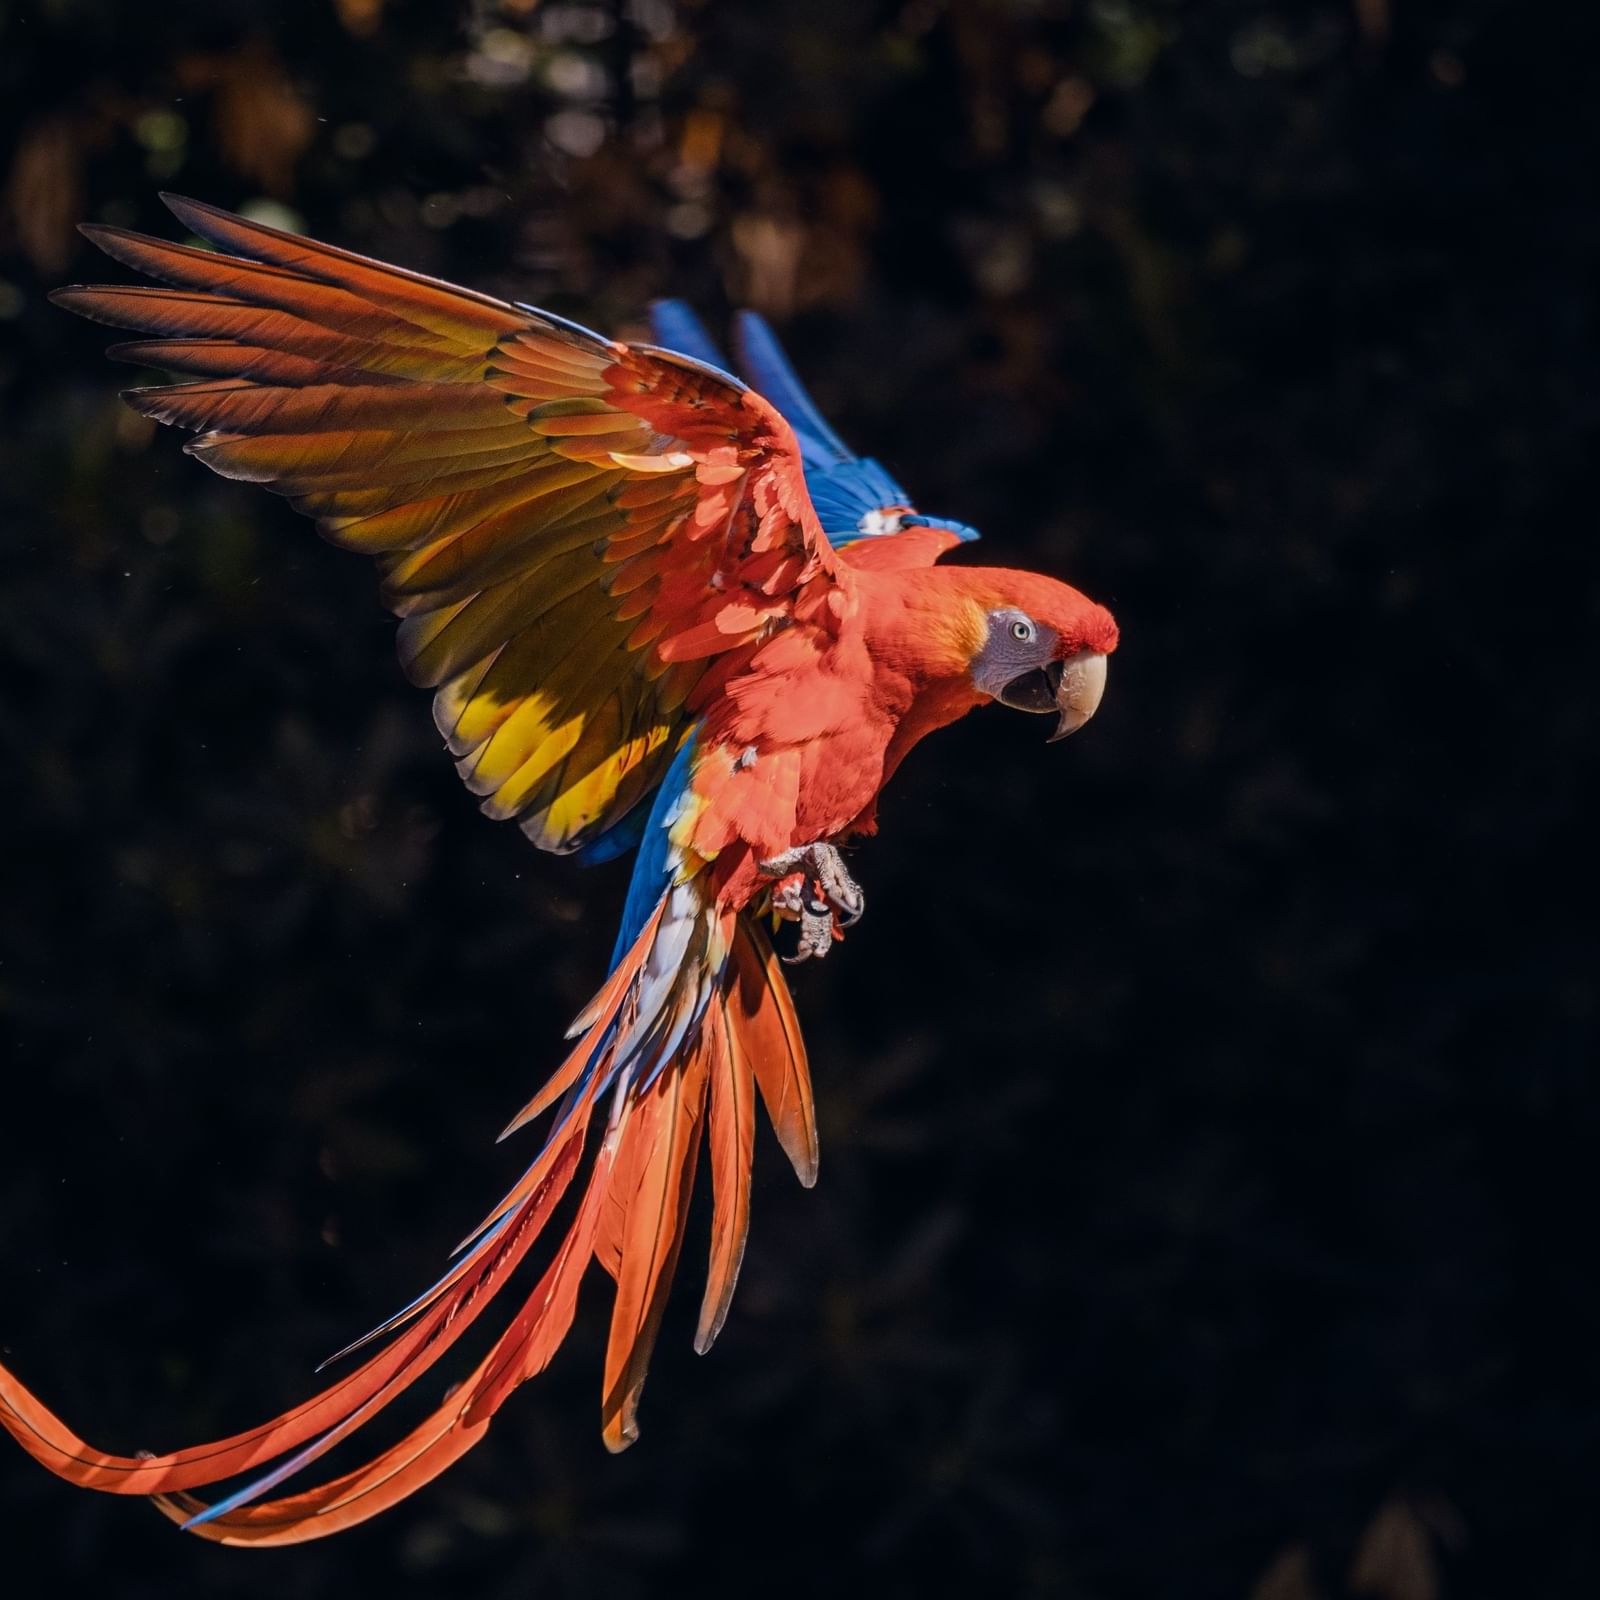 Macaw bird captured in the forest near Buena Vista Del Rincon